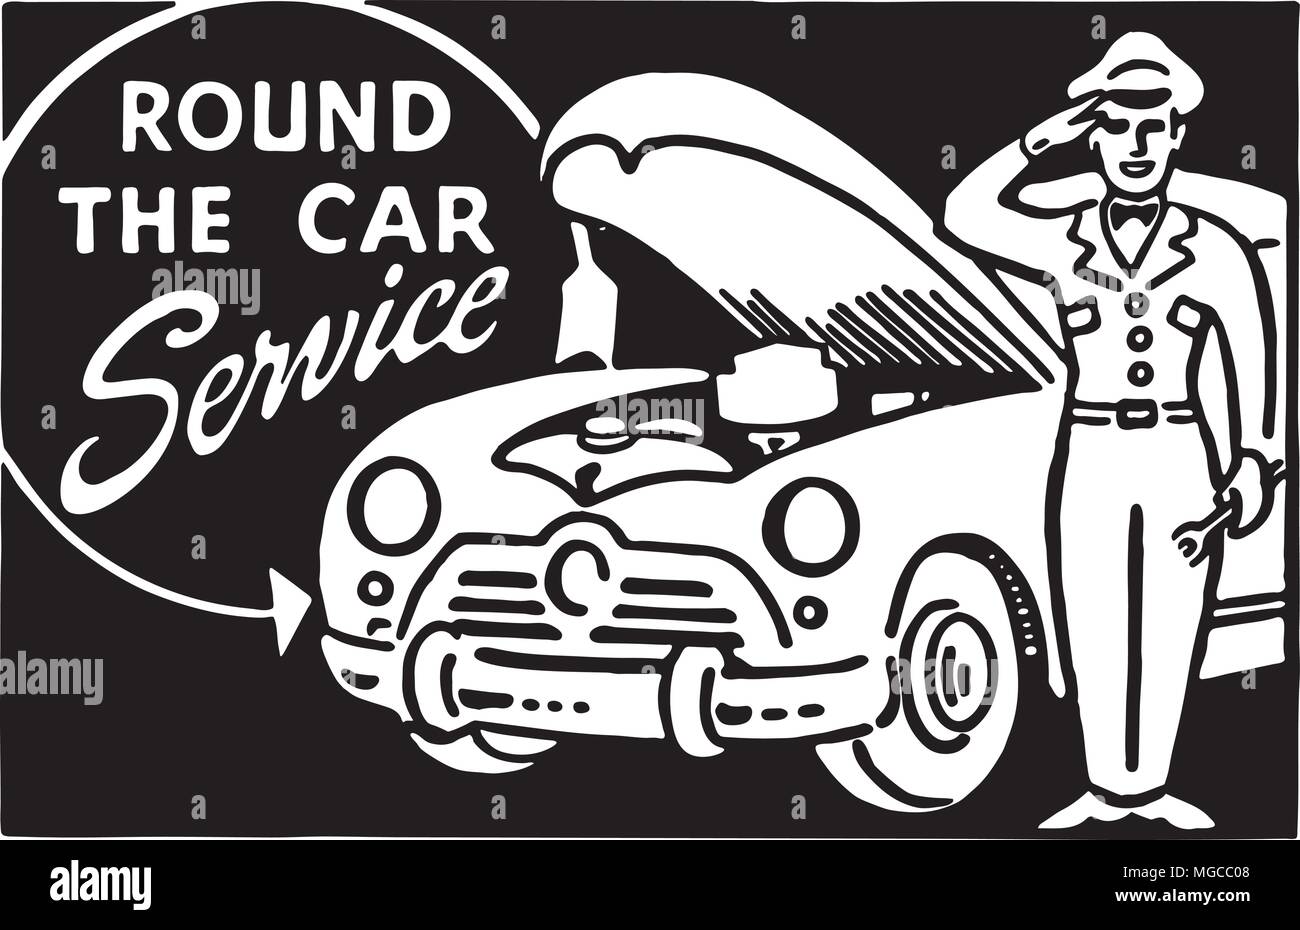 Round The Car Service 2 - Retro Ad Art Banner Stock Vector